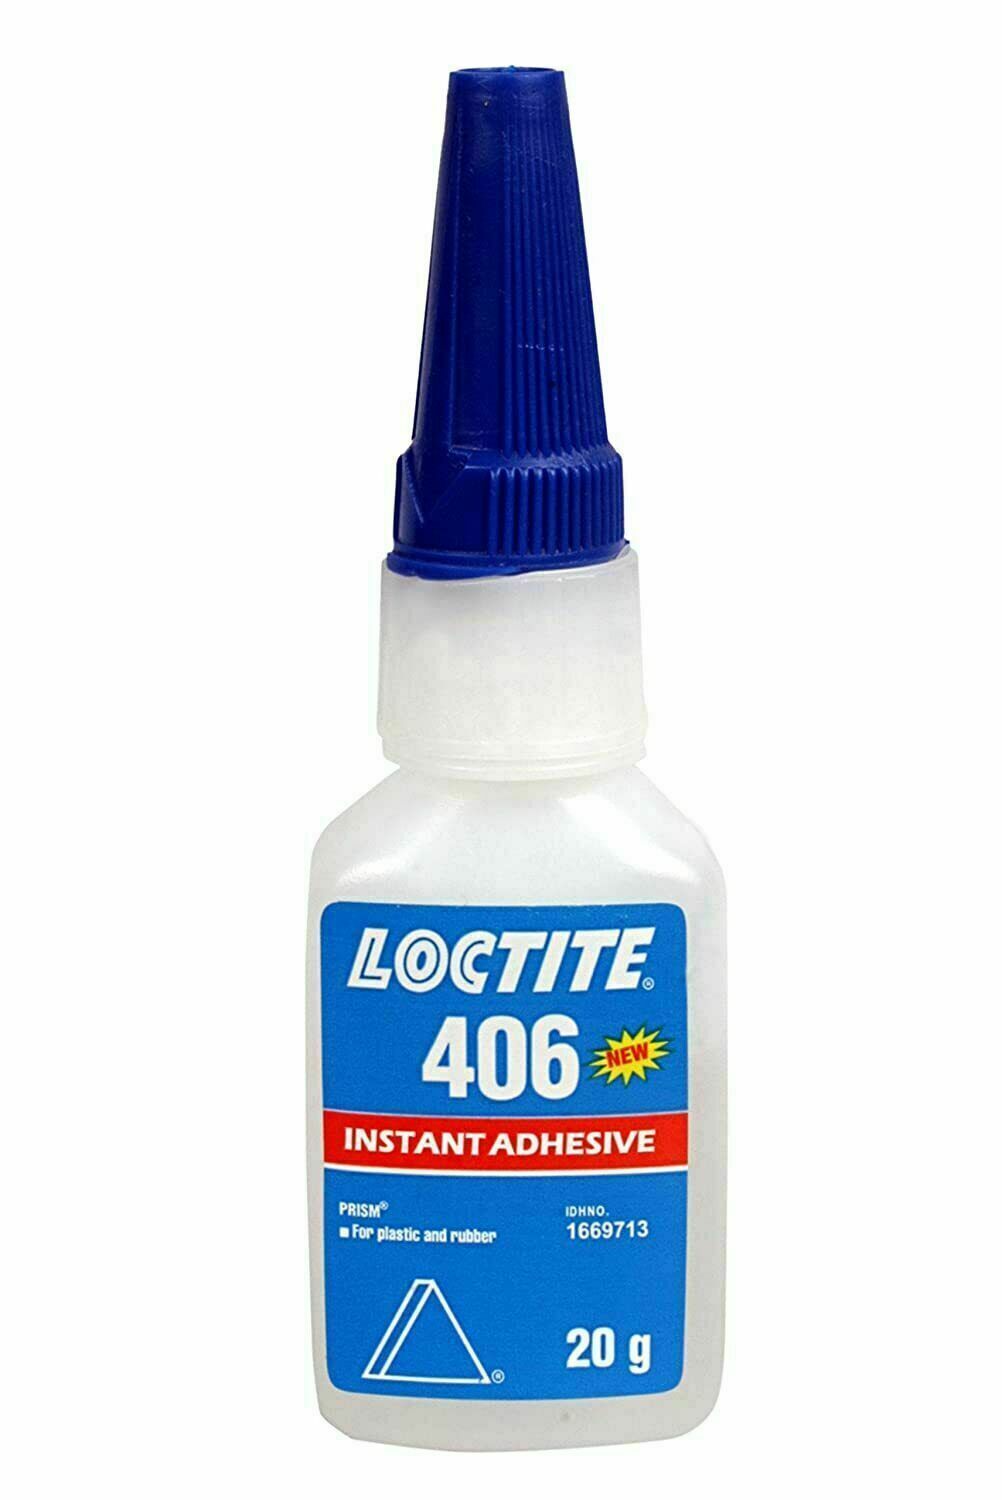 Loctite 406 Instant Adhesive Glue For Plastic & Rubber 20g